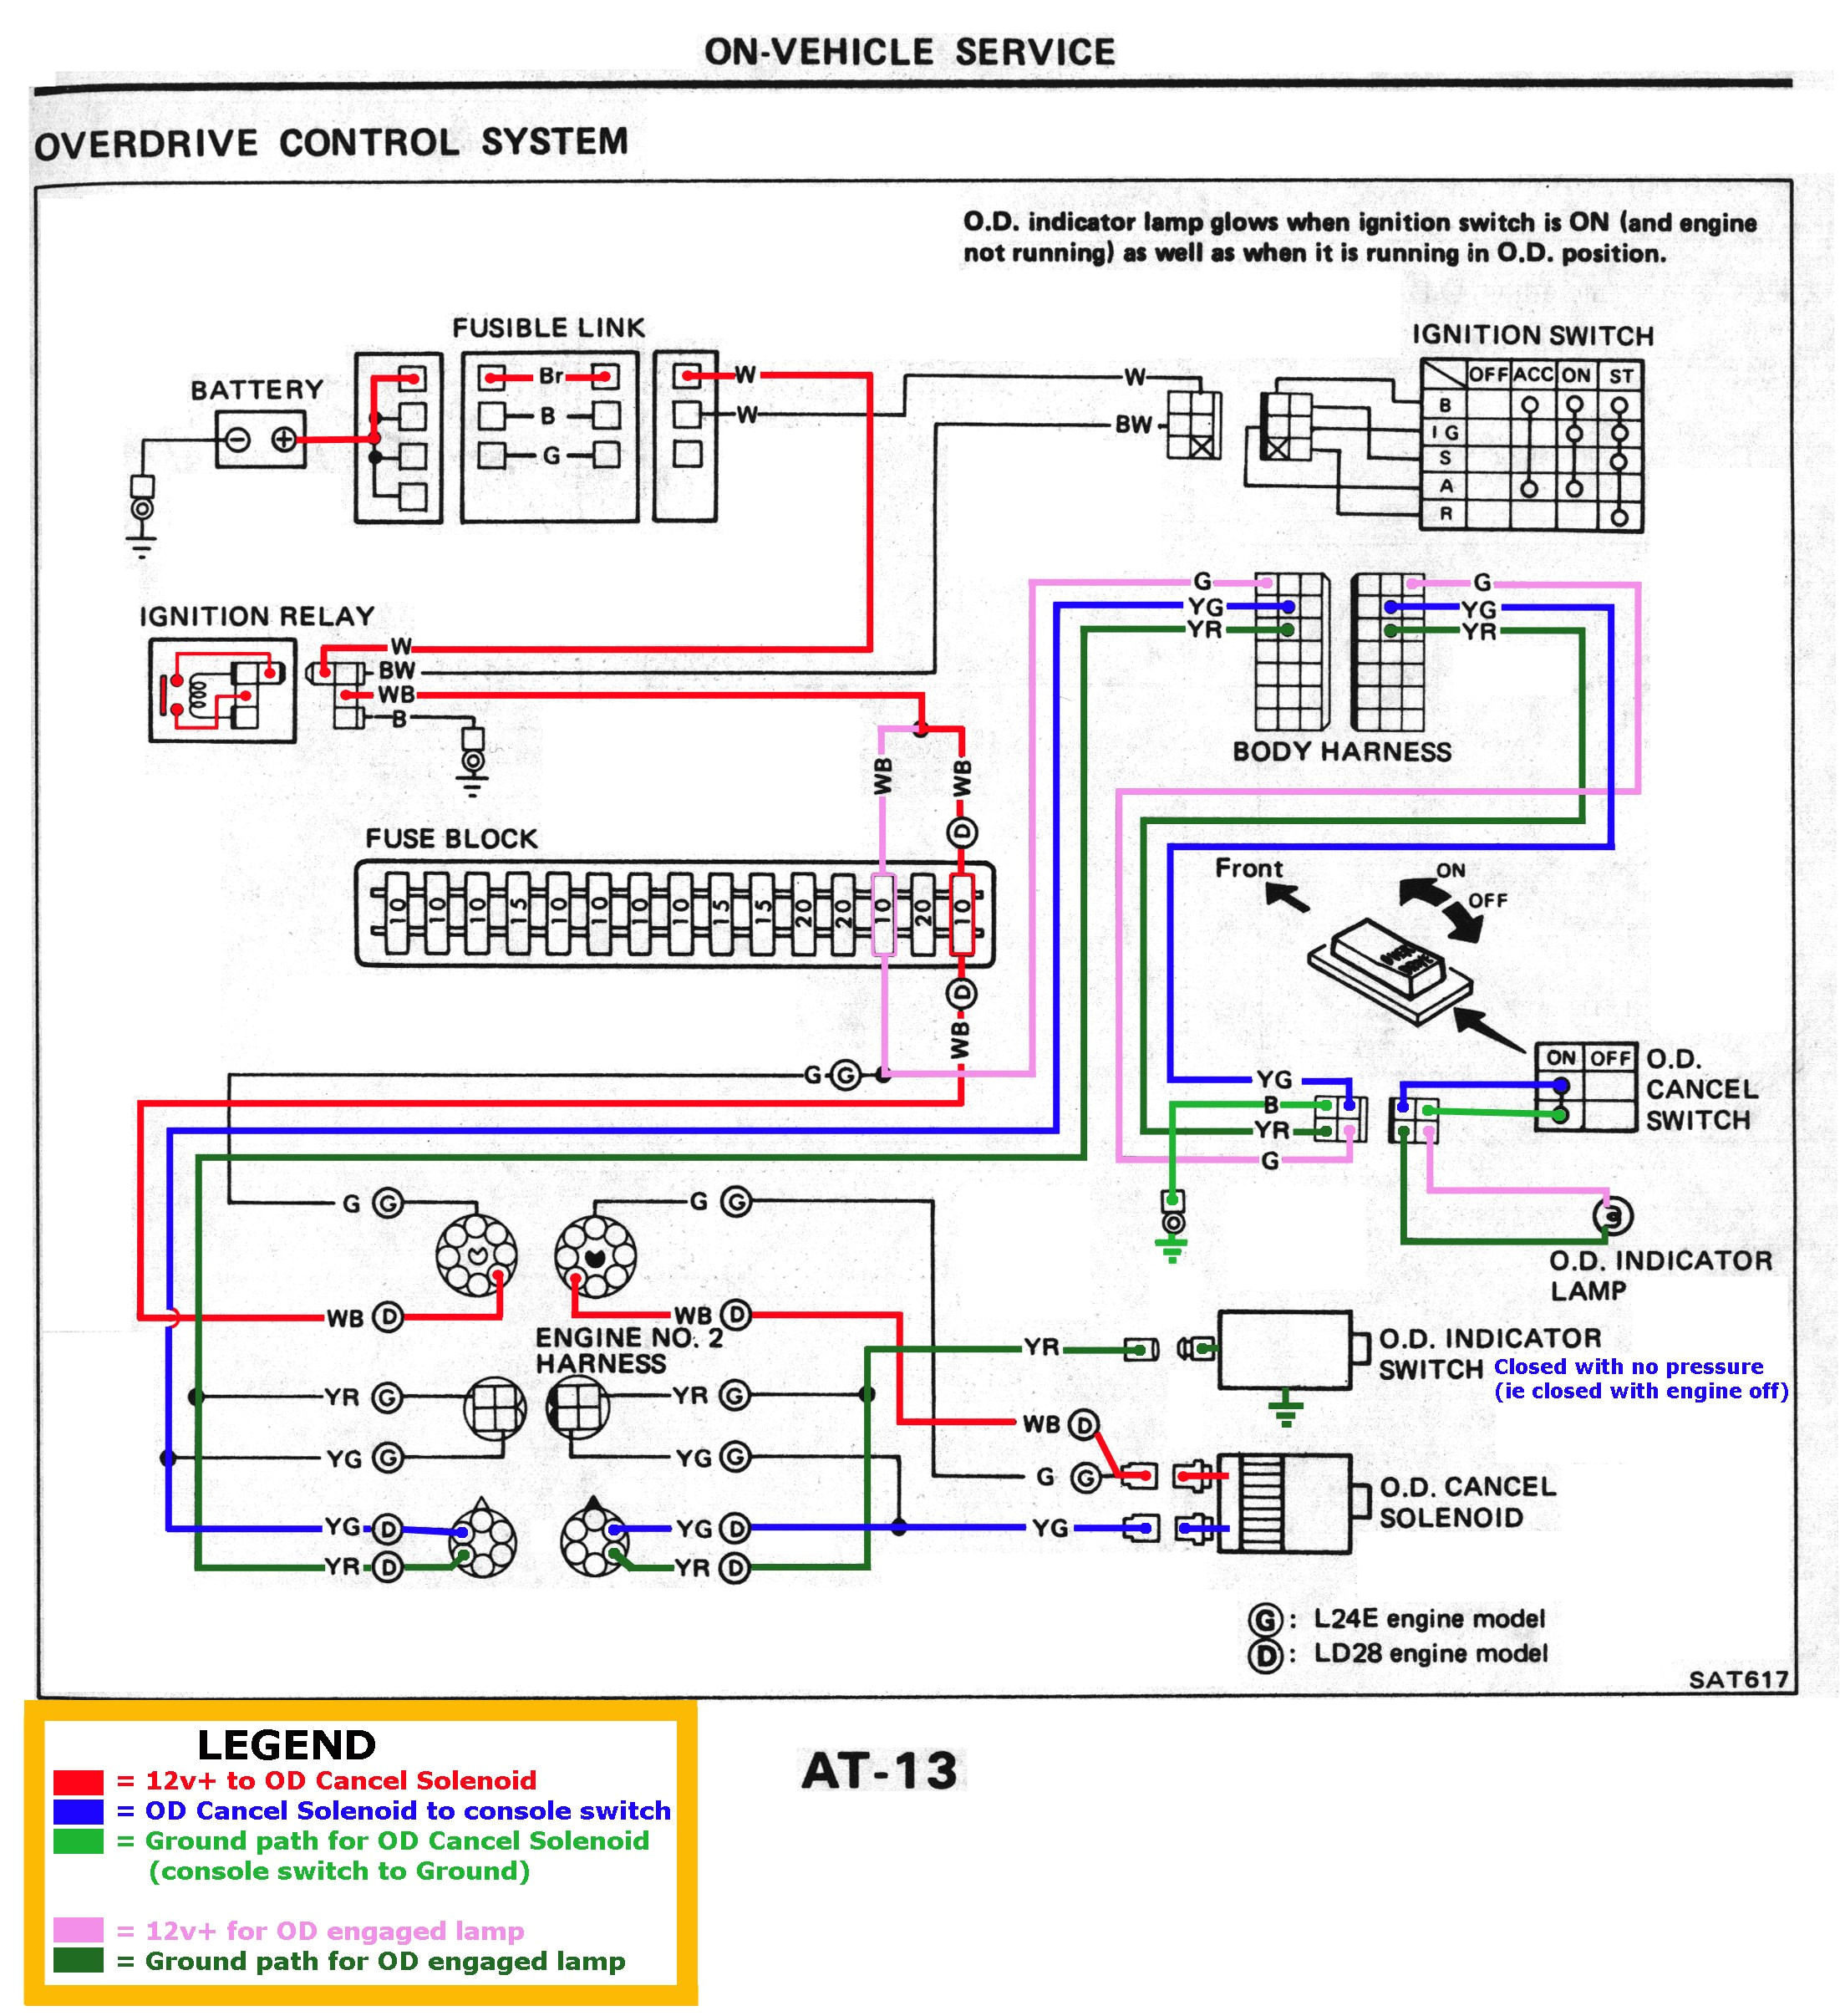 Nissan Navara D22 Radio Wiring Diagram Nissan Navara Wiring Diagram D40 Wiring Diagram Schematic